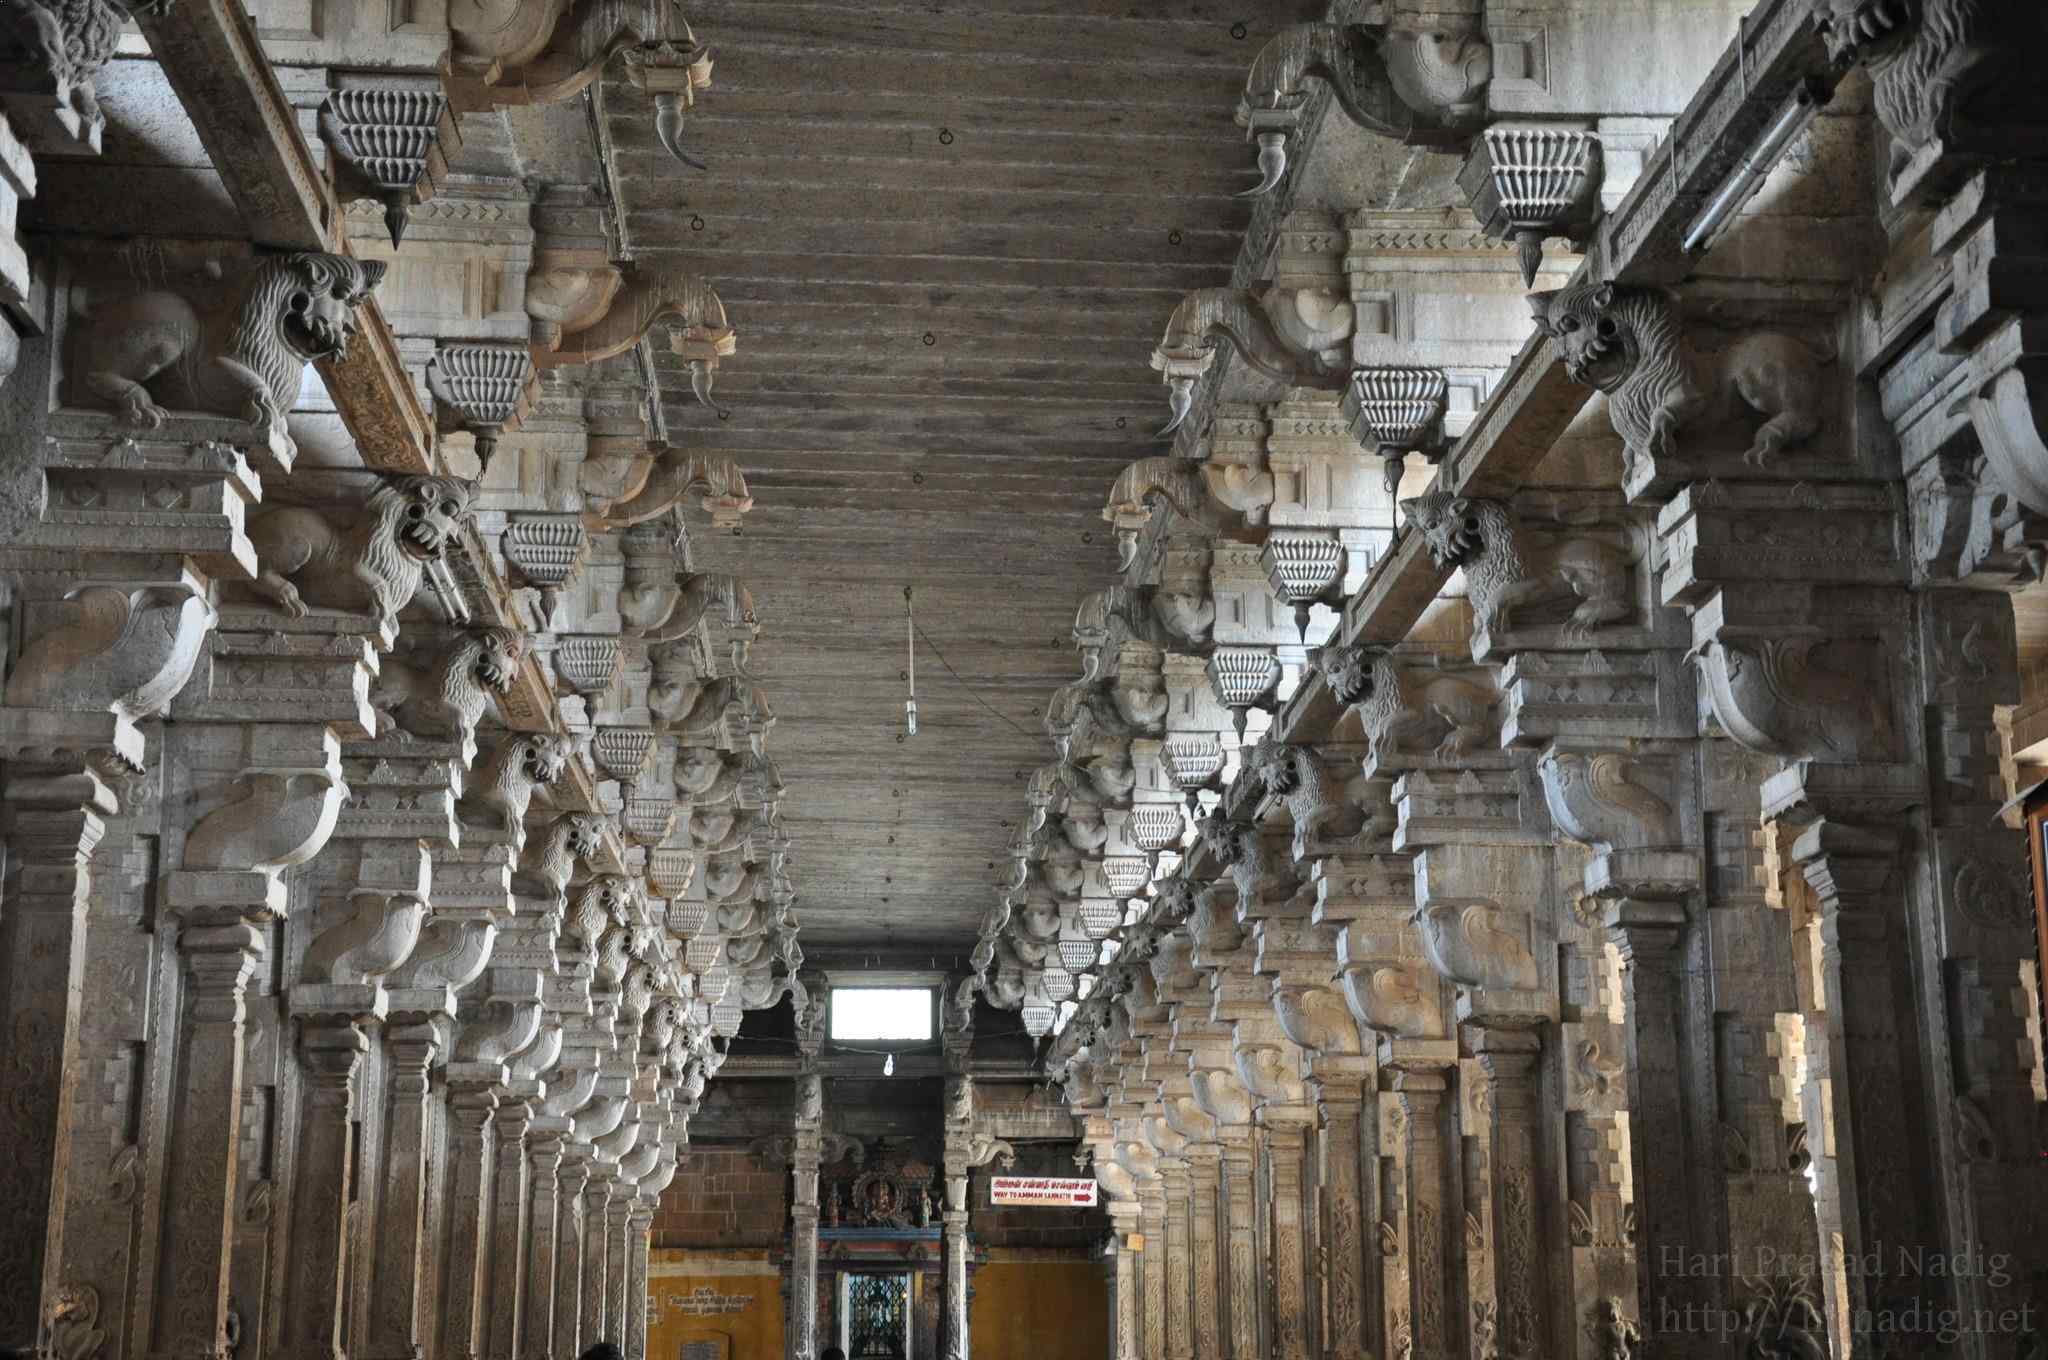 Jambukeswarar Temple, Tamil Nadu